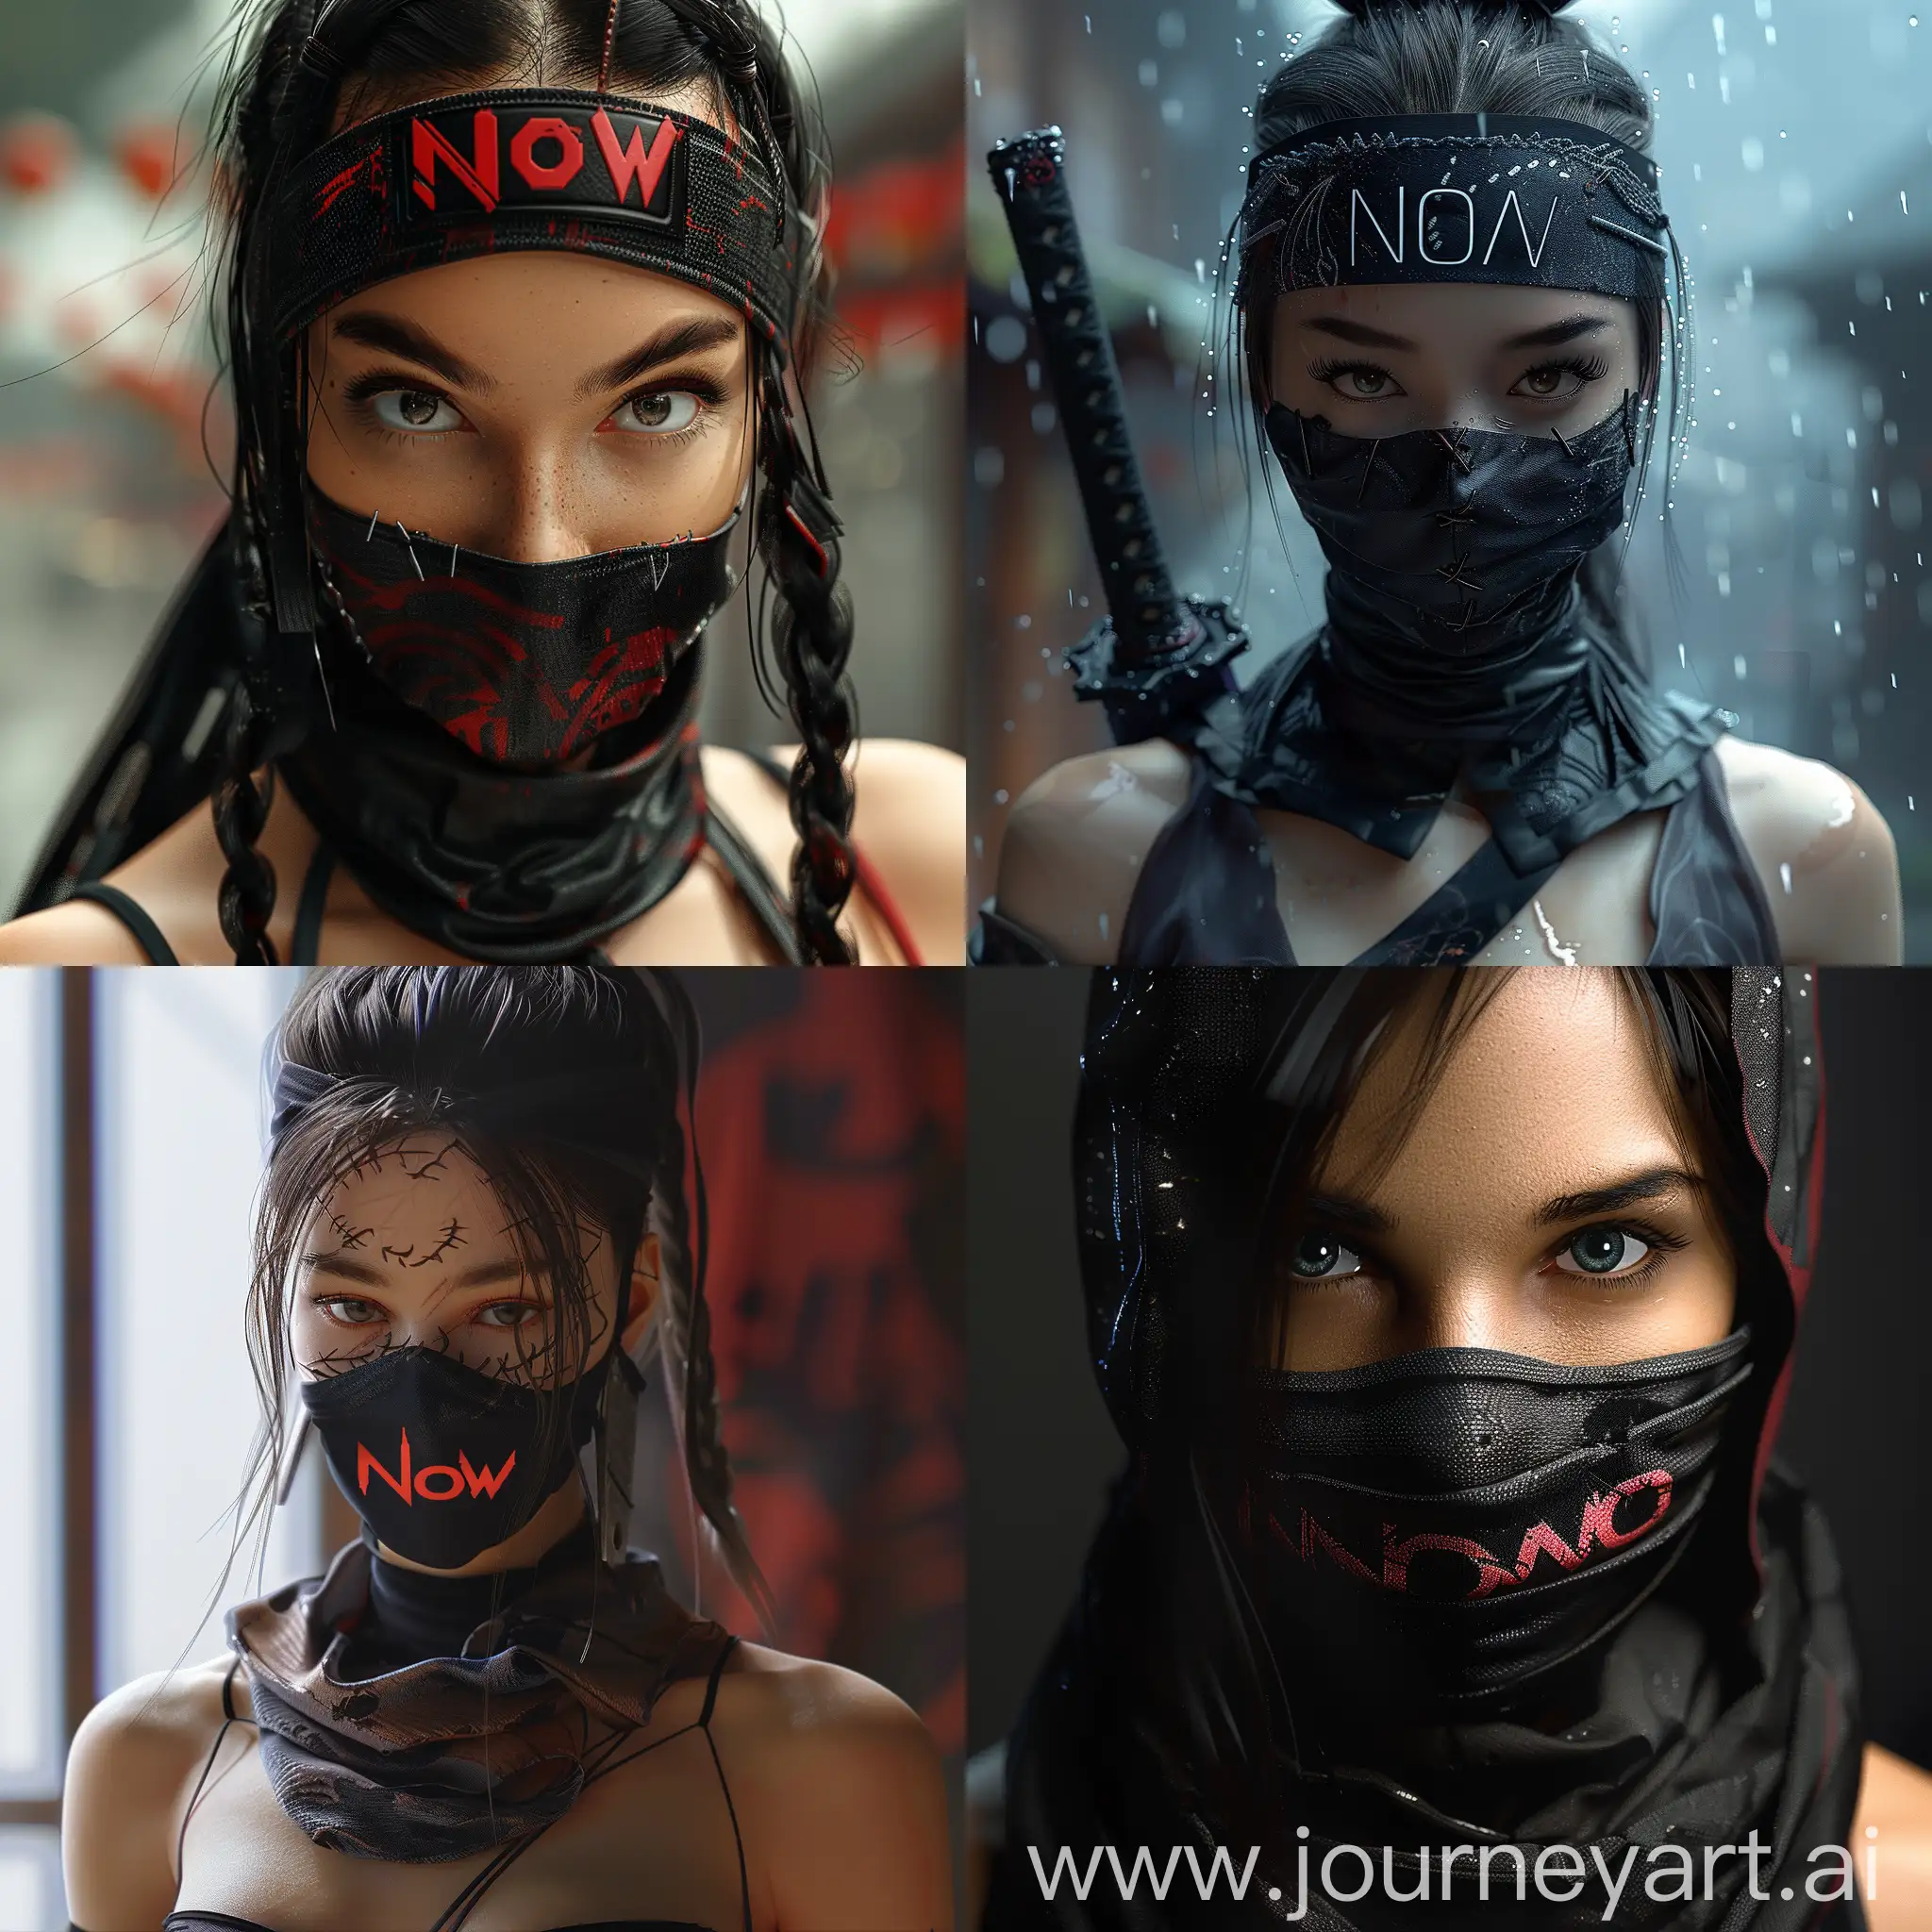 Stunning-Ninja-Woman-with-NOVA-Emblem-in-Hyperrealistic-8K